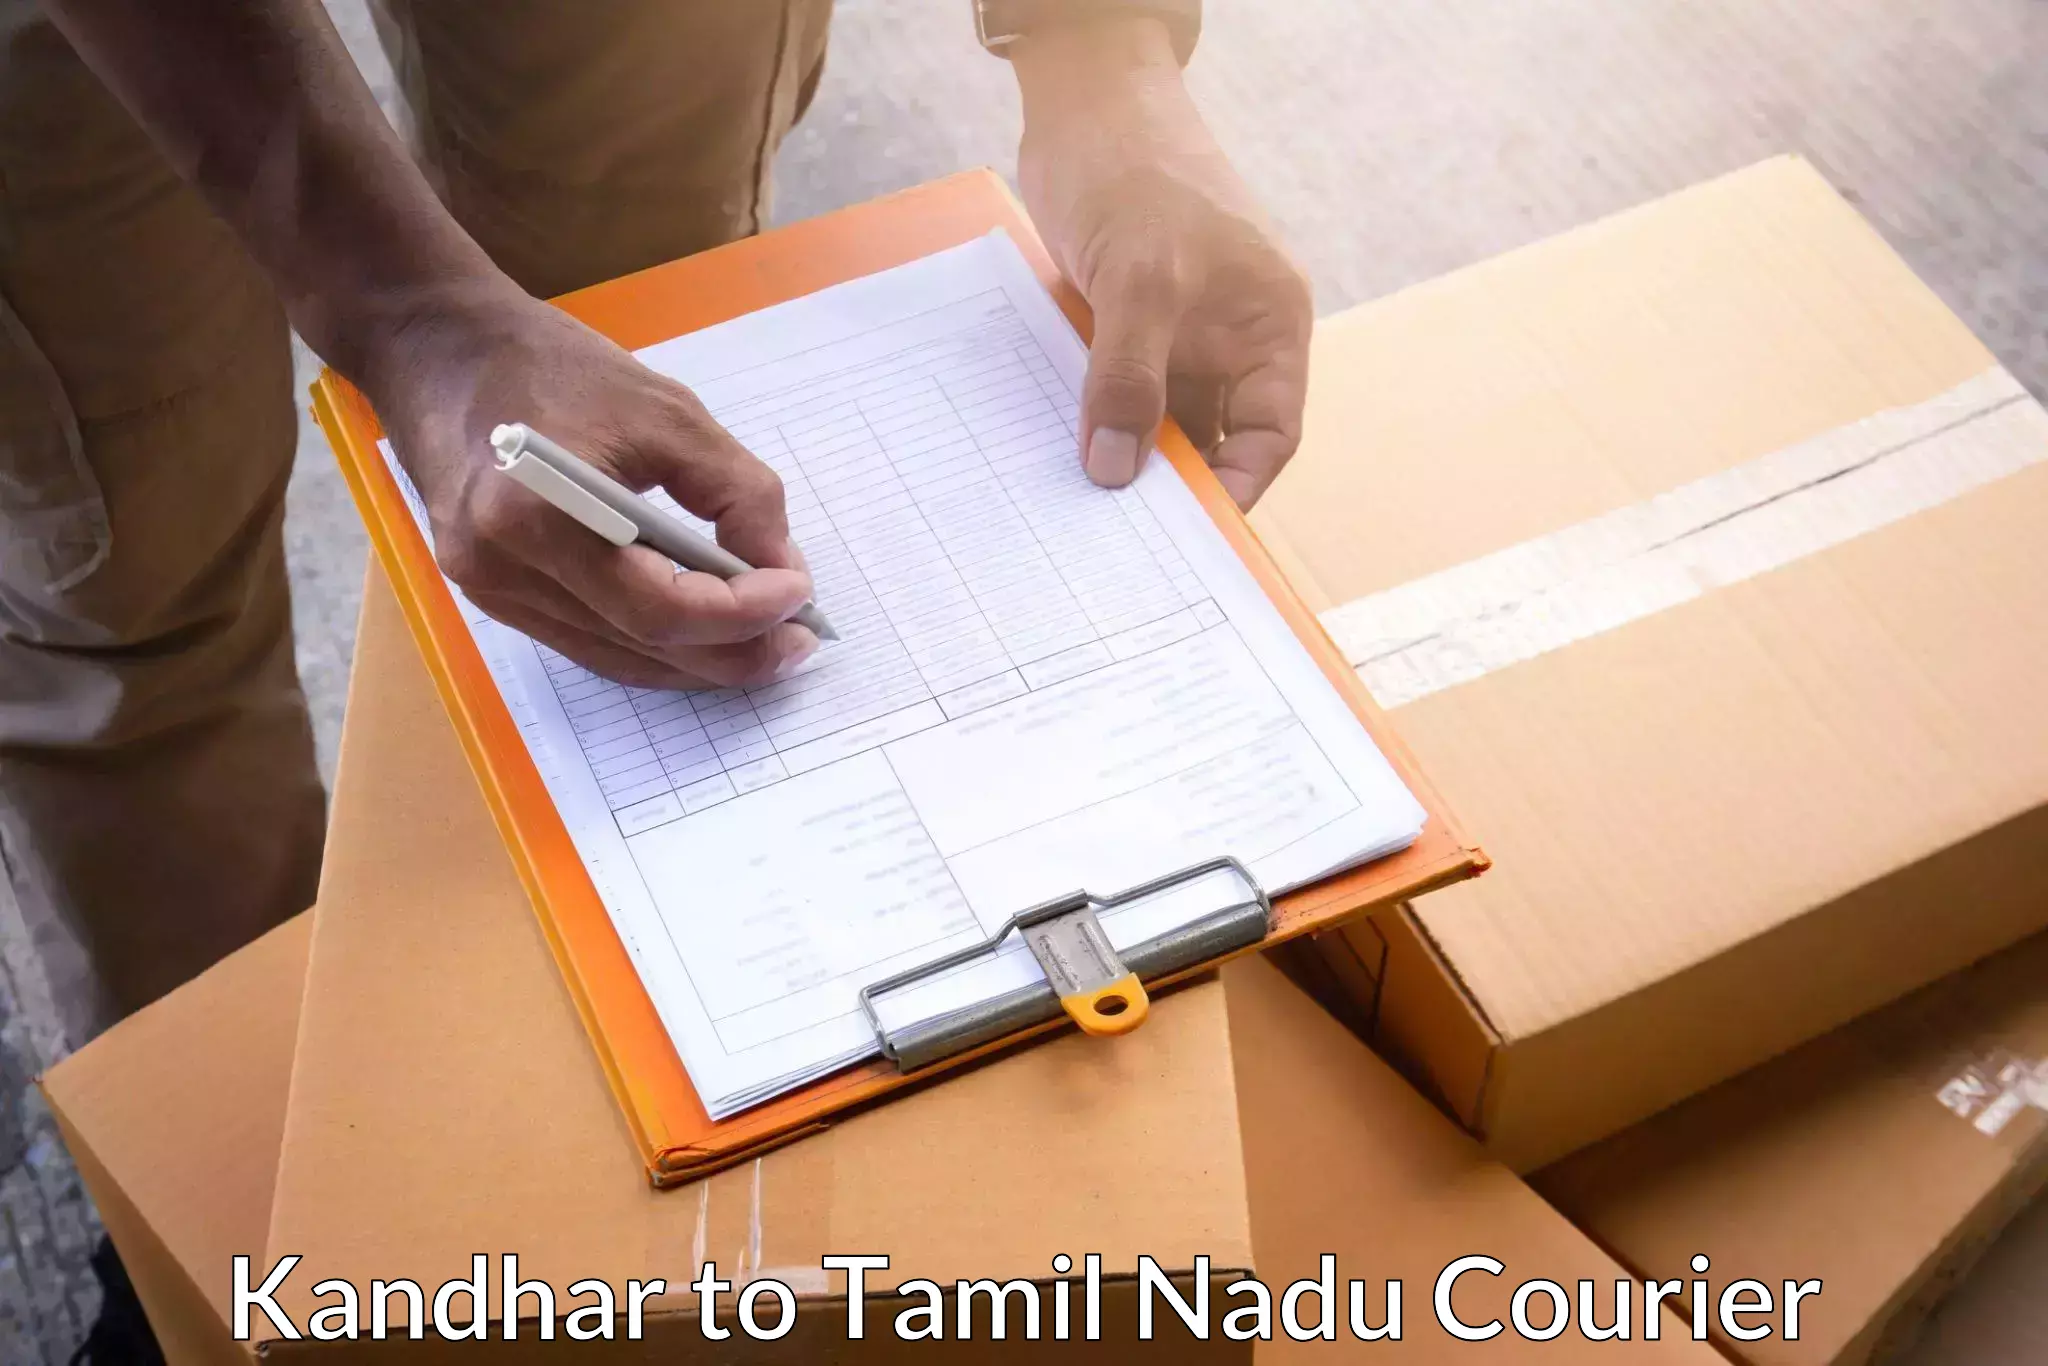 Premium courier services in Kandhar to Chennai Port